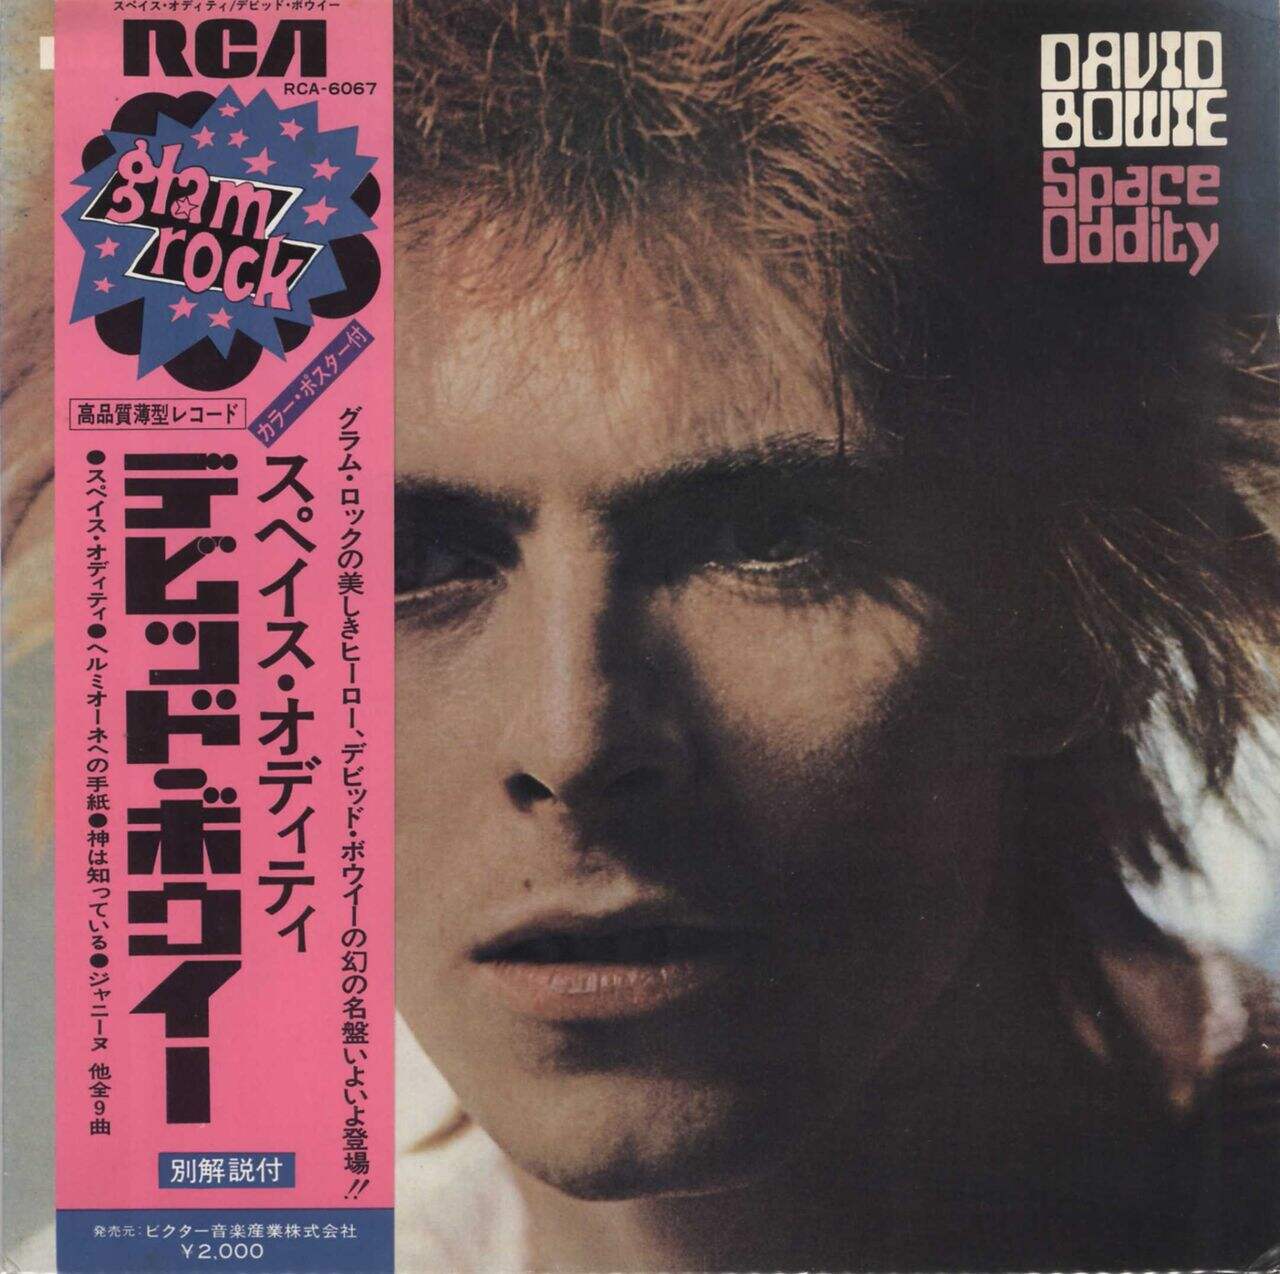 David Bowie Space Oddity + Poster + Obi Japanese Vinyl LP